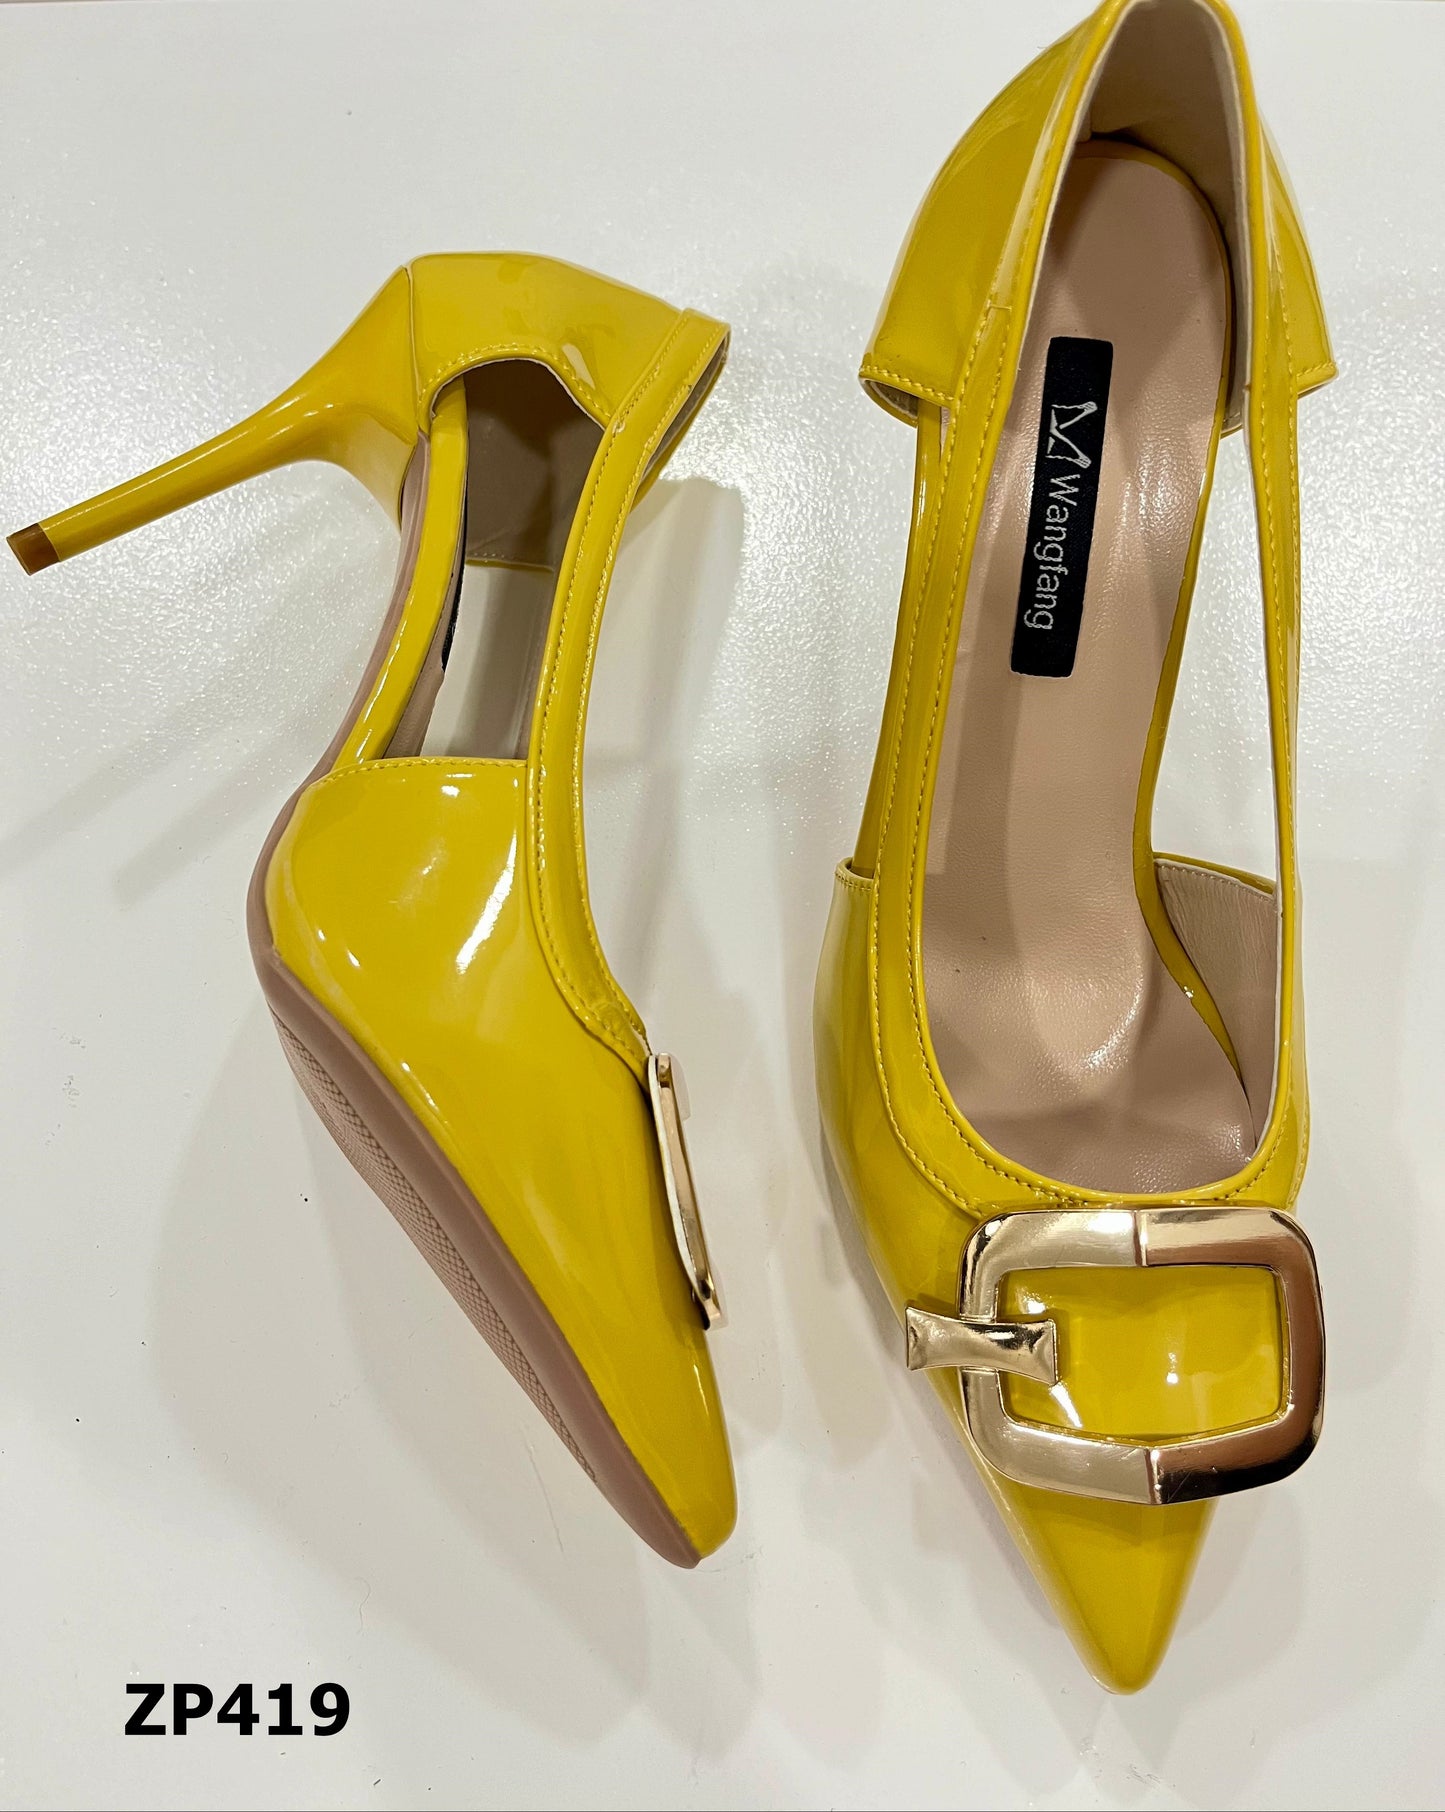 Zapato de tacón alto color amarillo